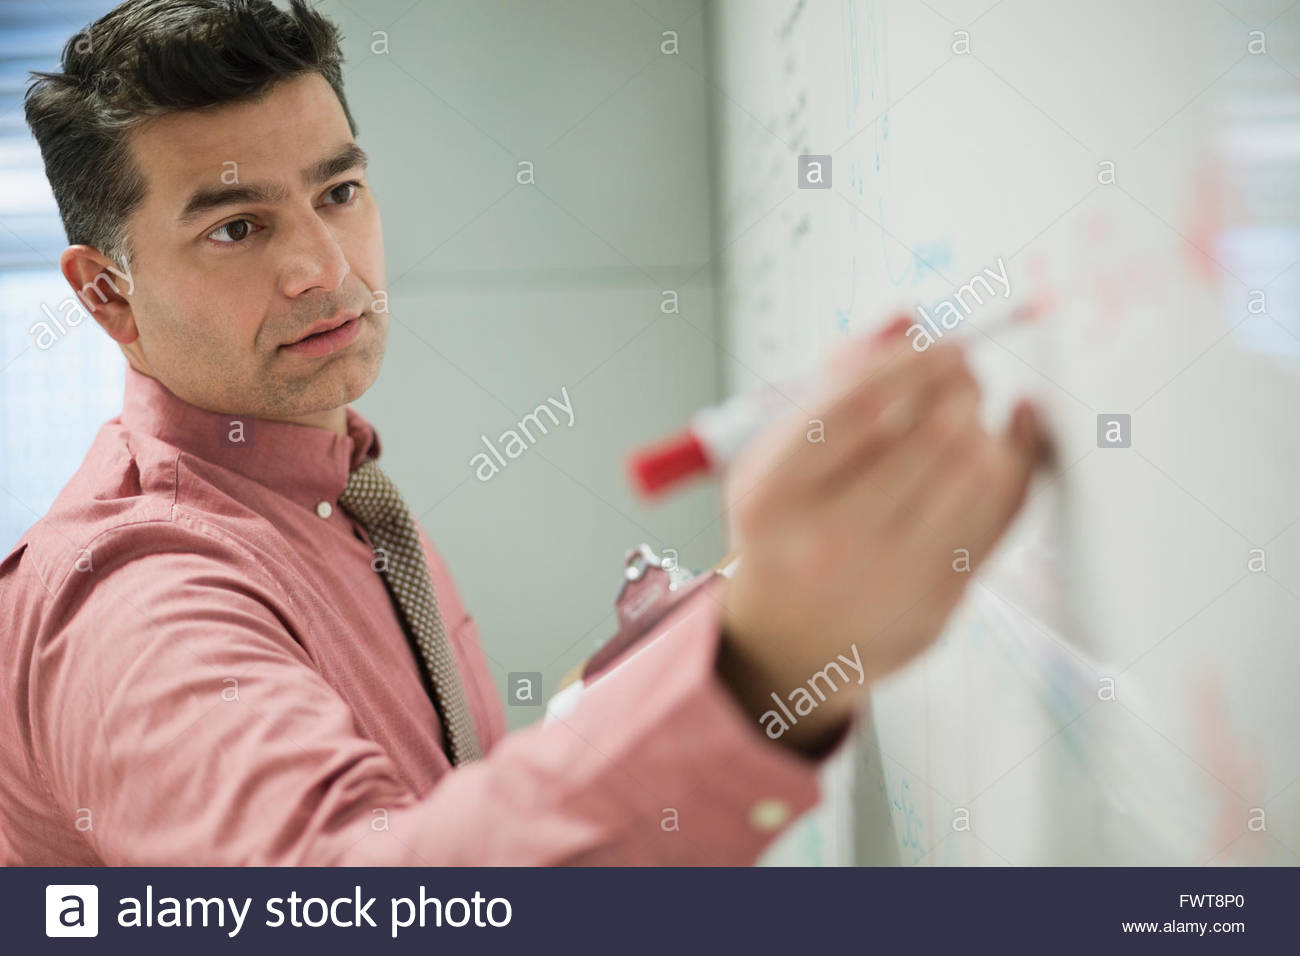 Businessman writing on whiteboard in board room Stock Photo